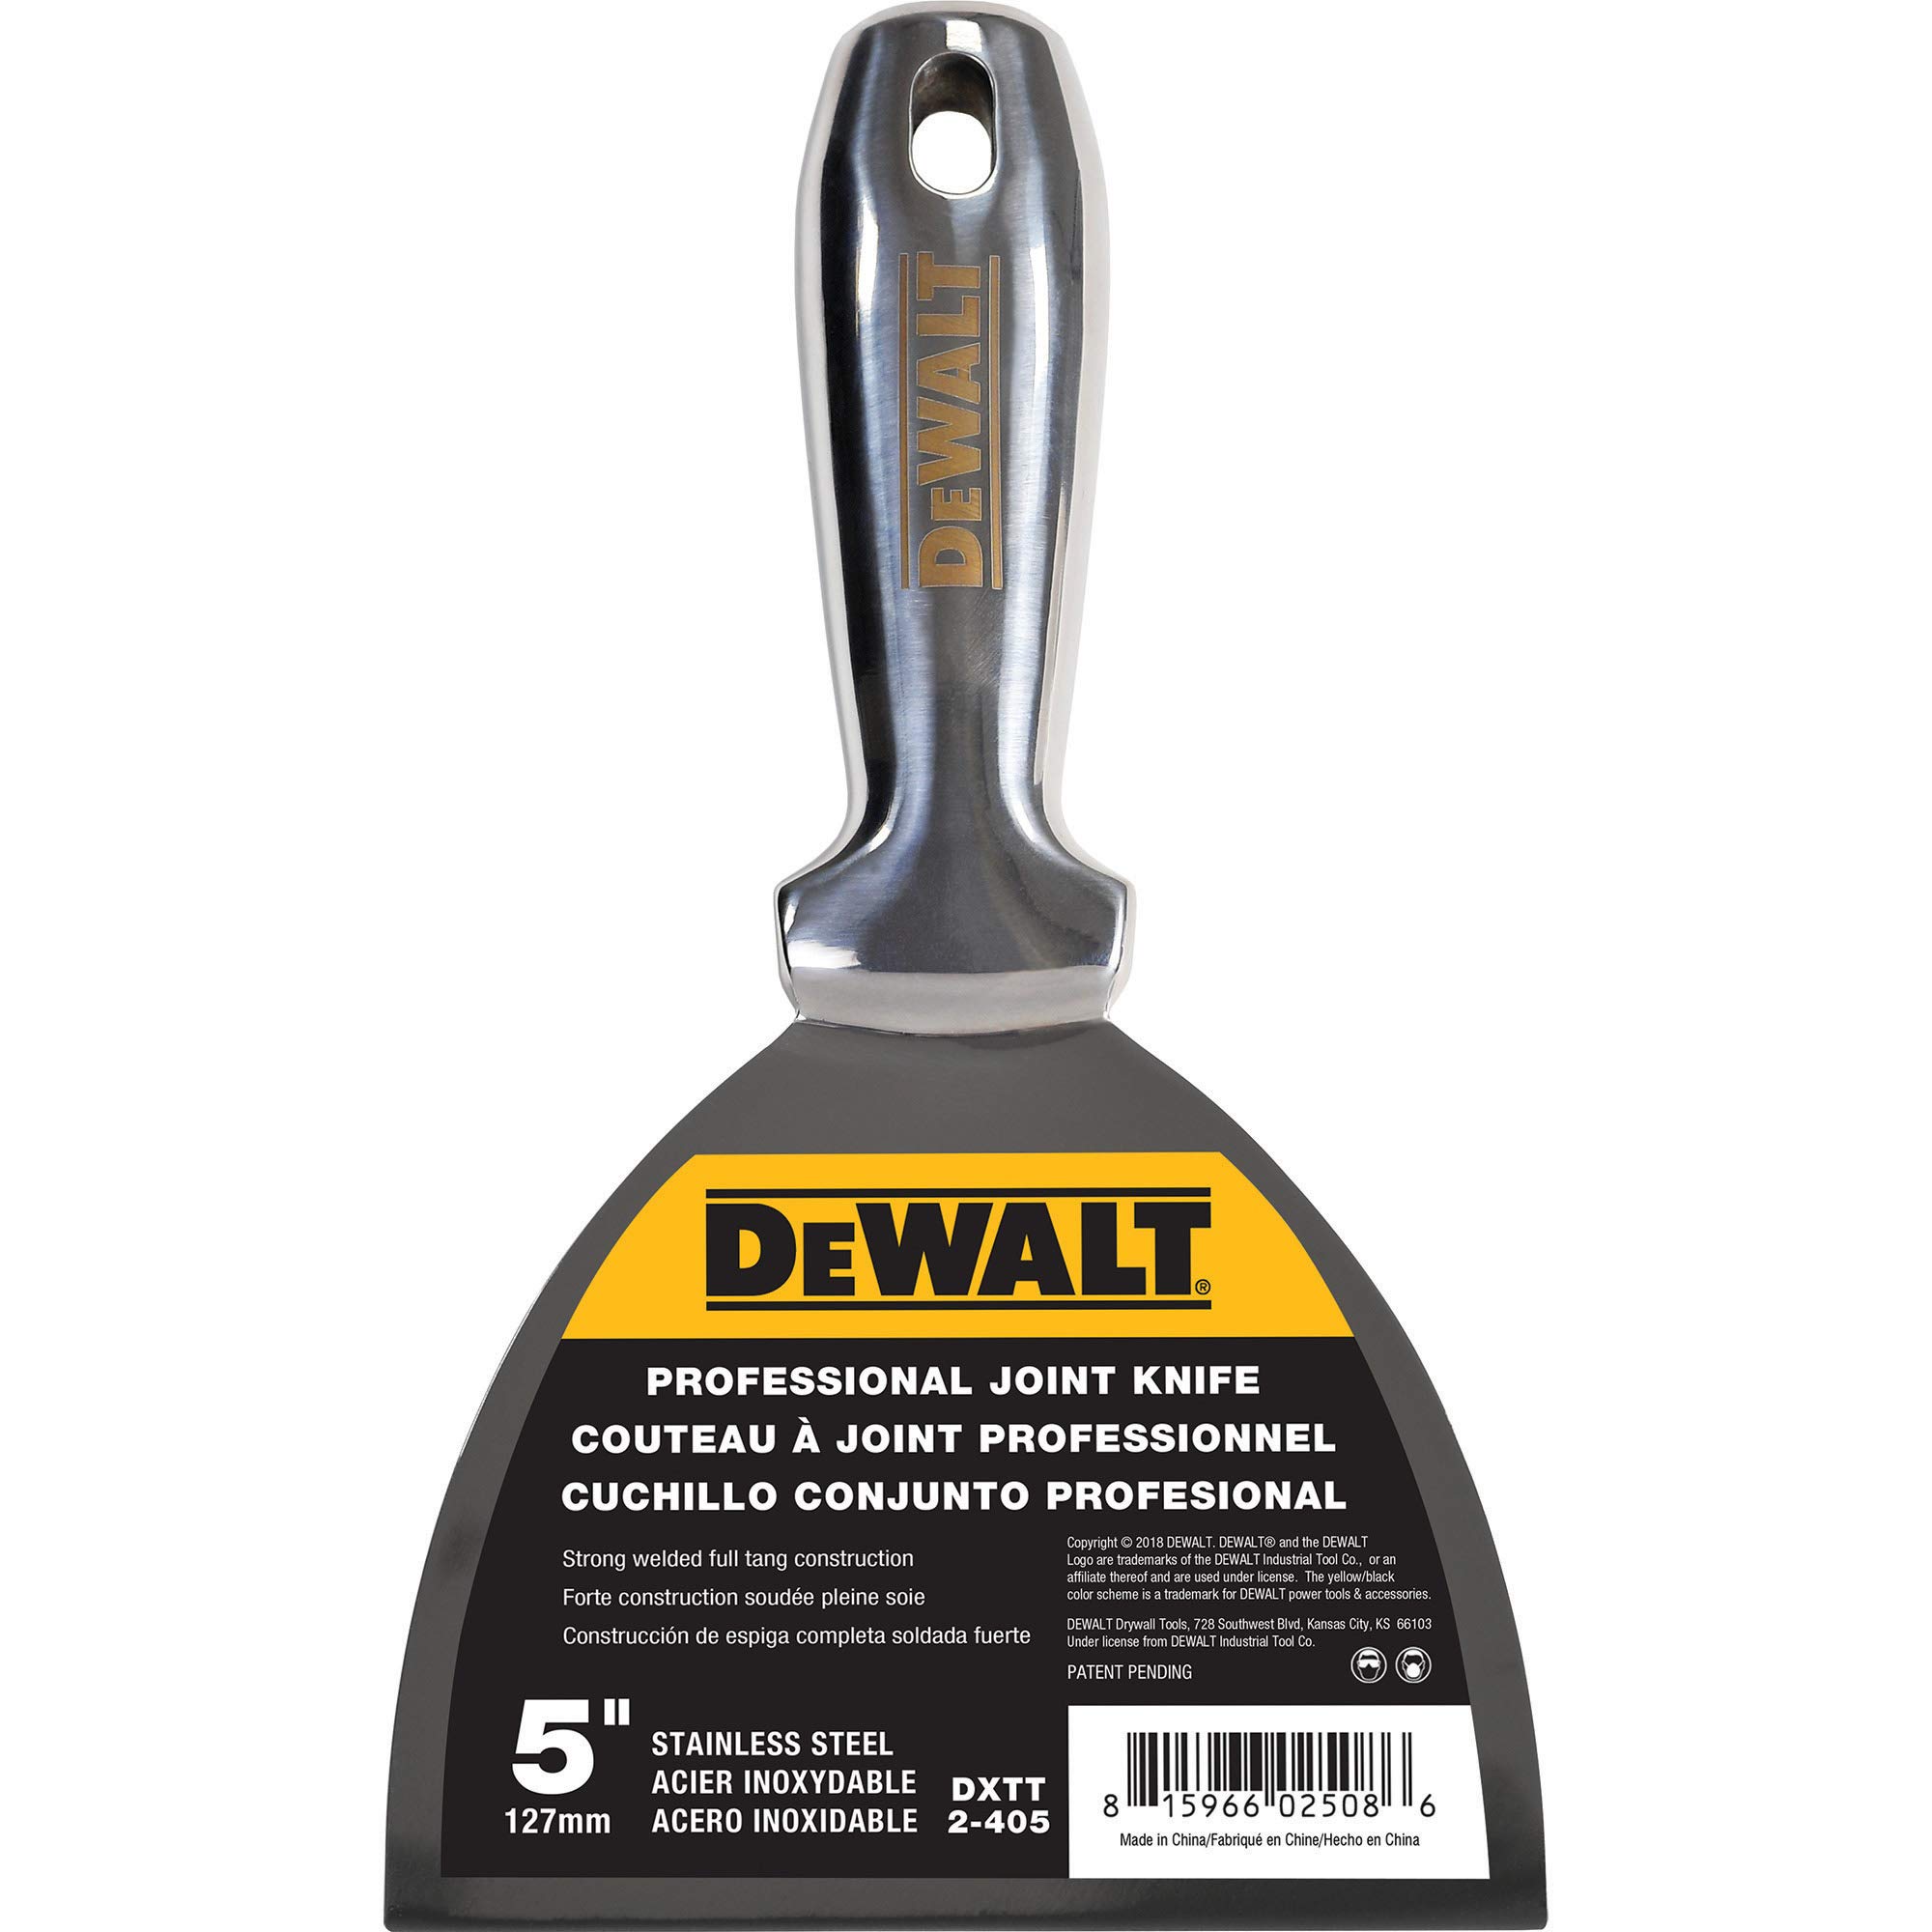 DeWALT 5 Welded Stainless Steel Metal Professional Joint Putty Blade Knife 2-405 $8.99 Amazon